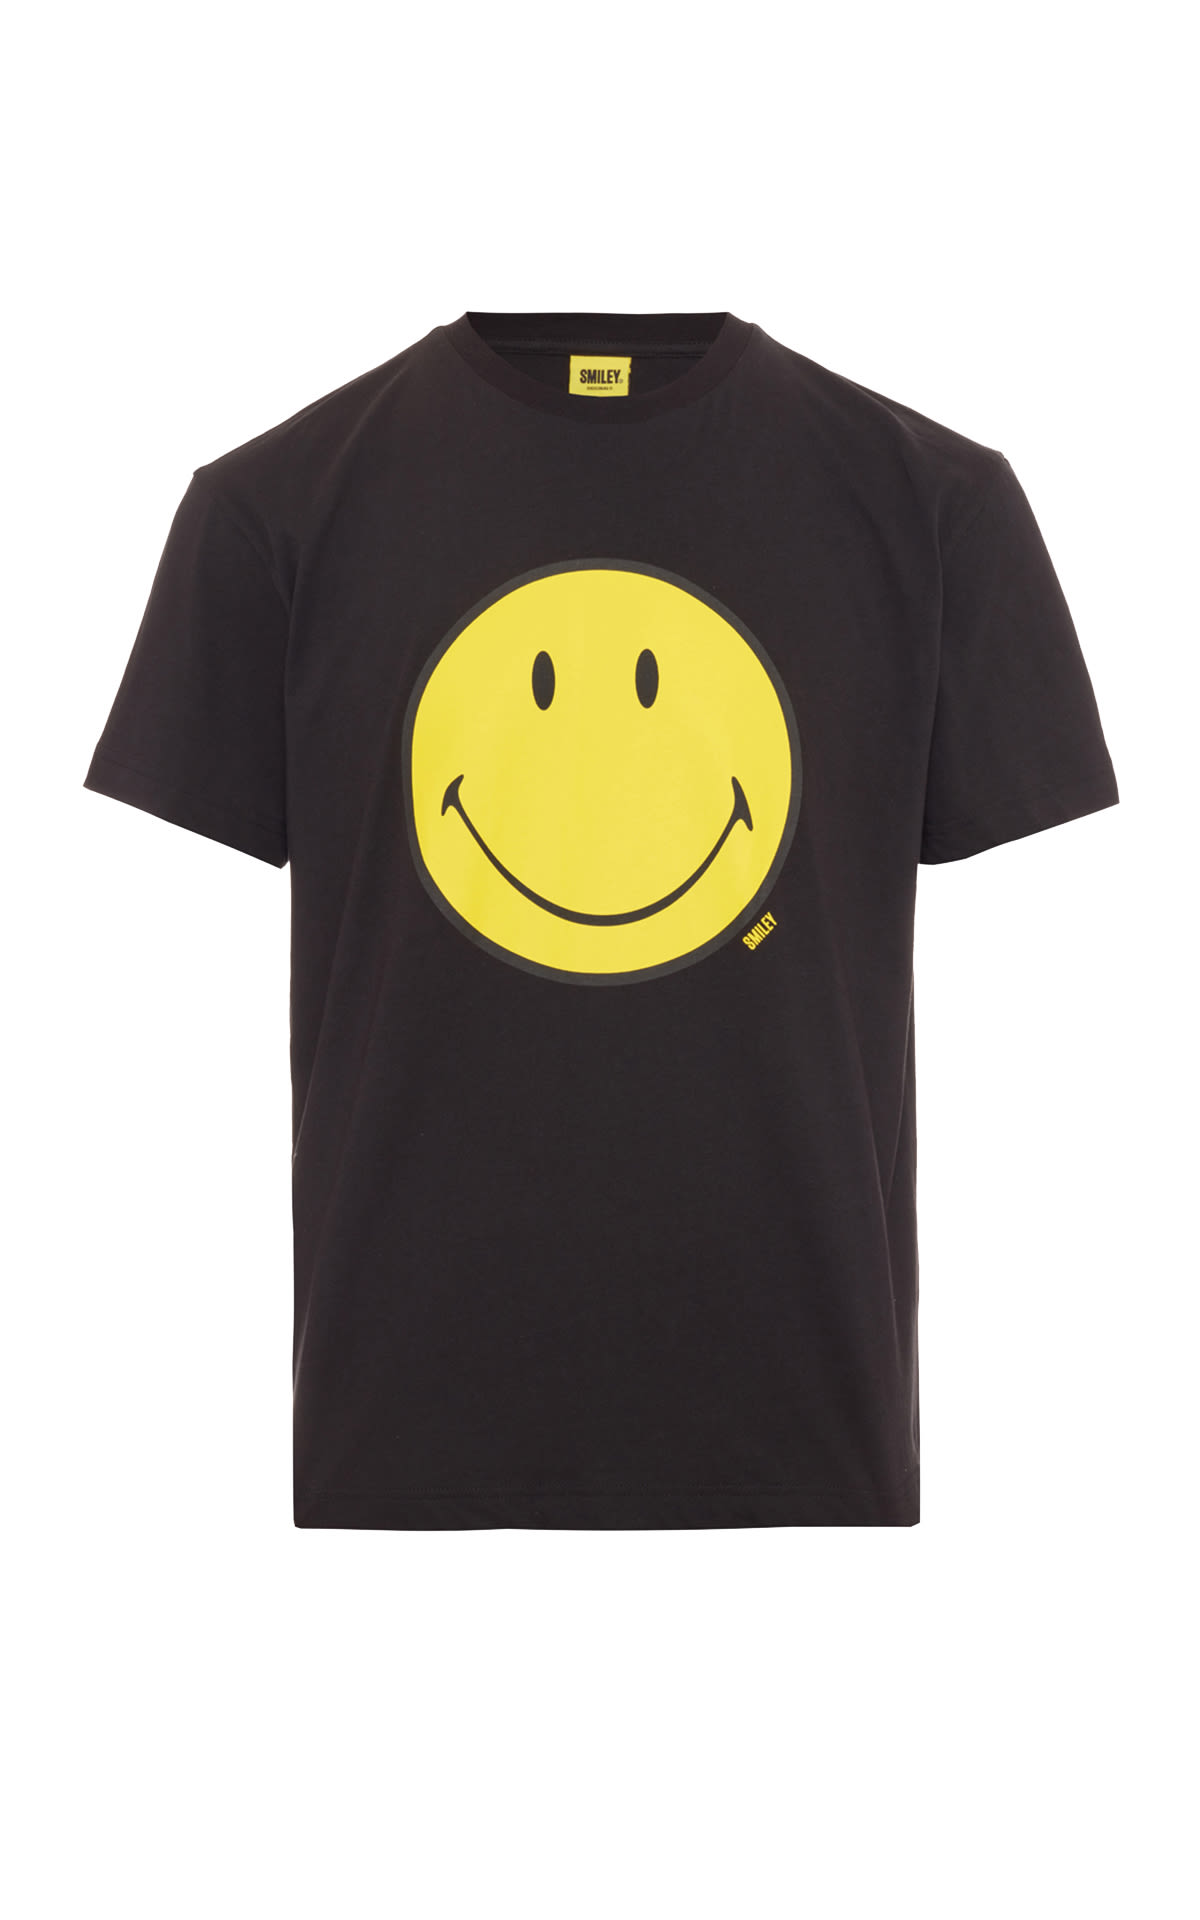 The Smiley Company t-shirt noir La Vallée Village